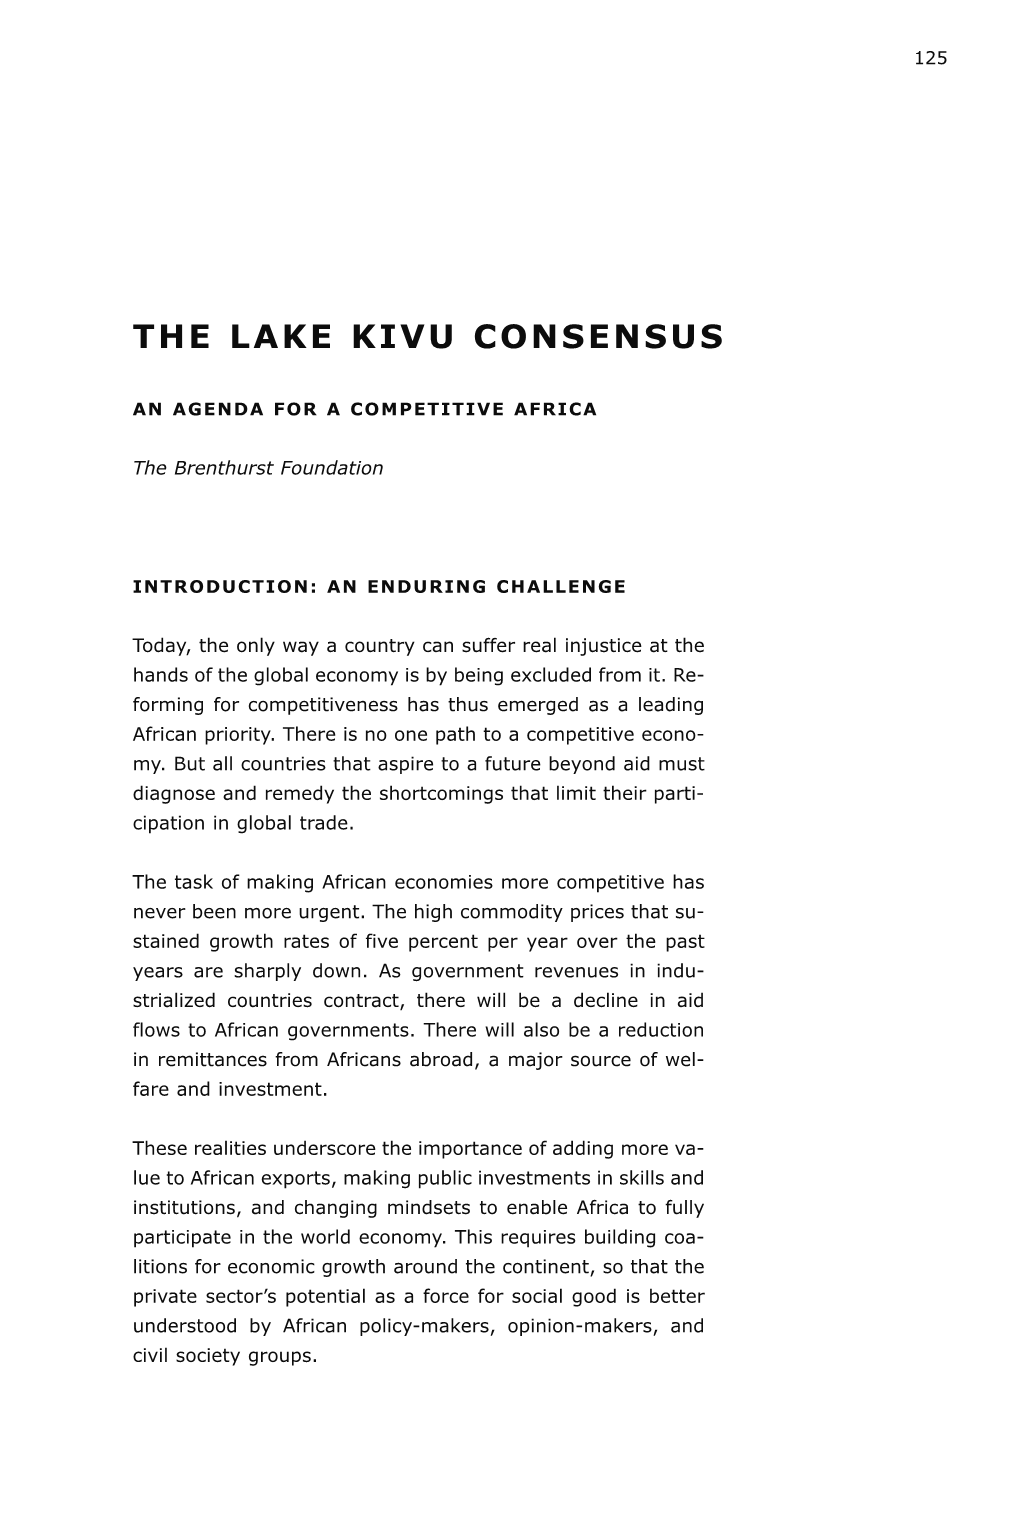 The Lake Kivu Consensus